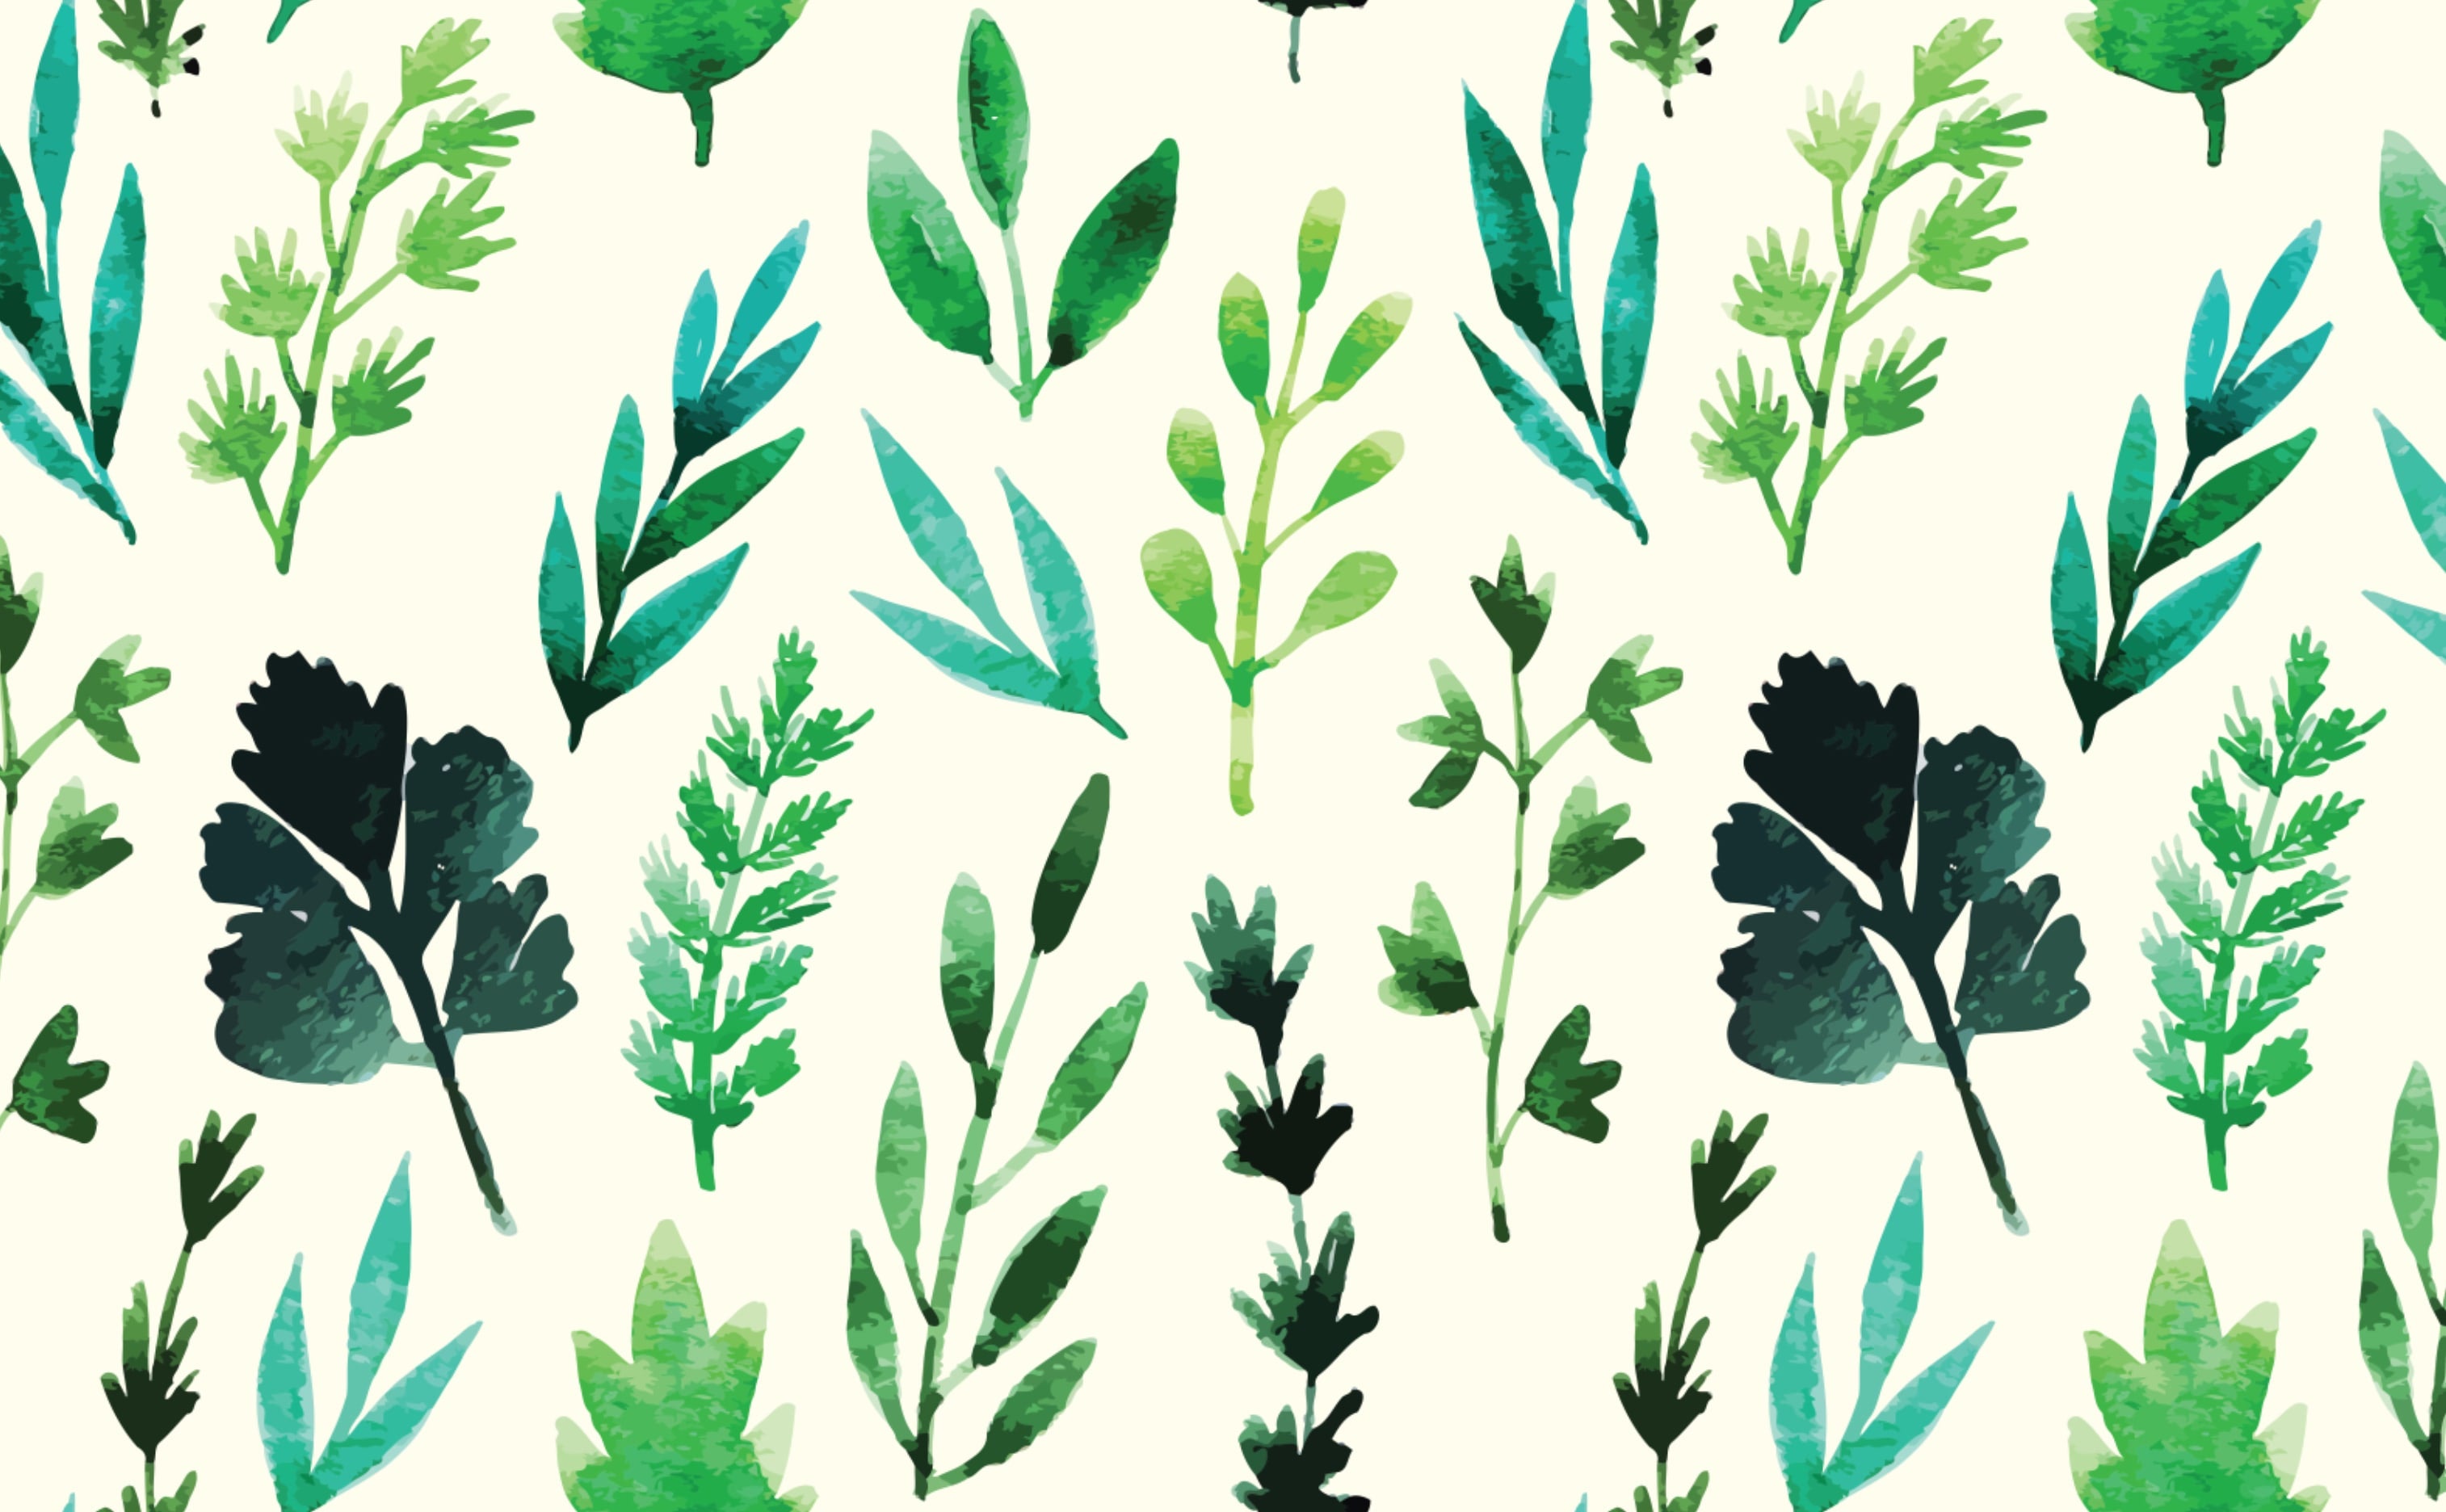 Wallpaper of herbs drawn in watercolor  Stock Illustration 49126603   PIXTA